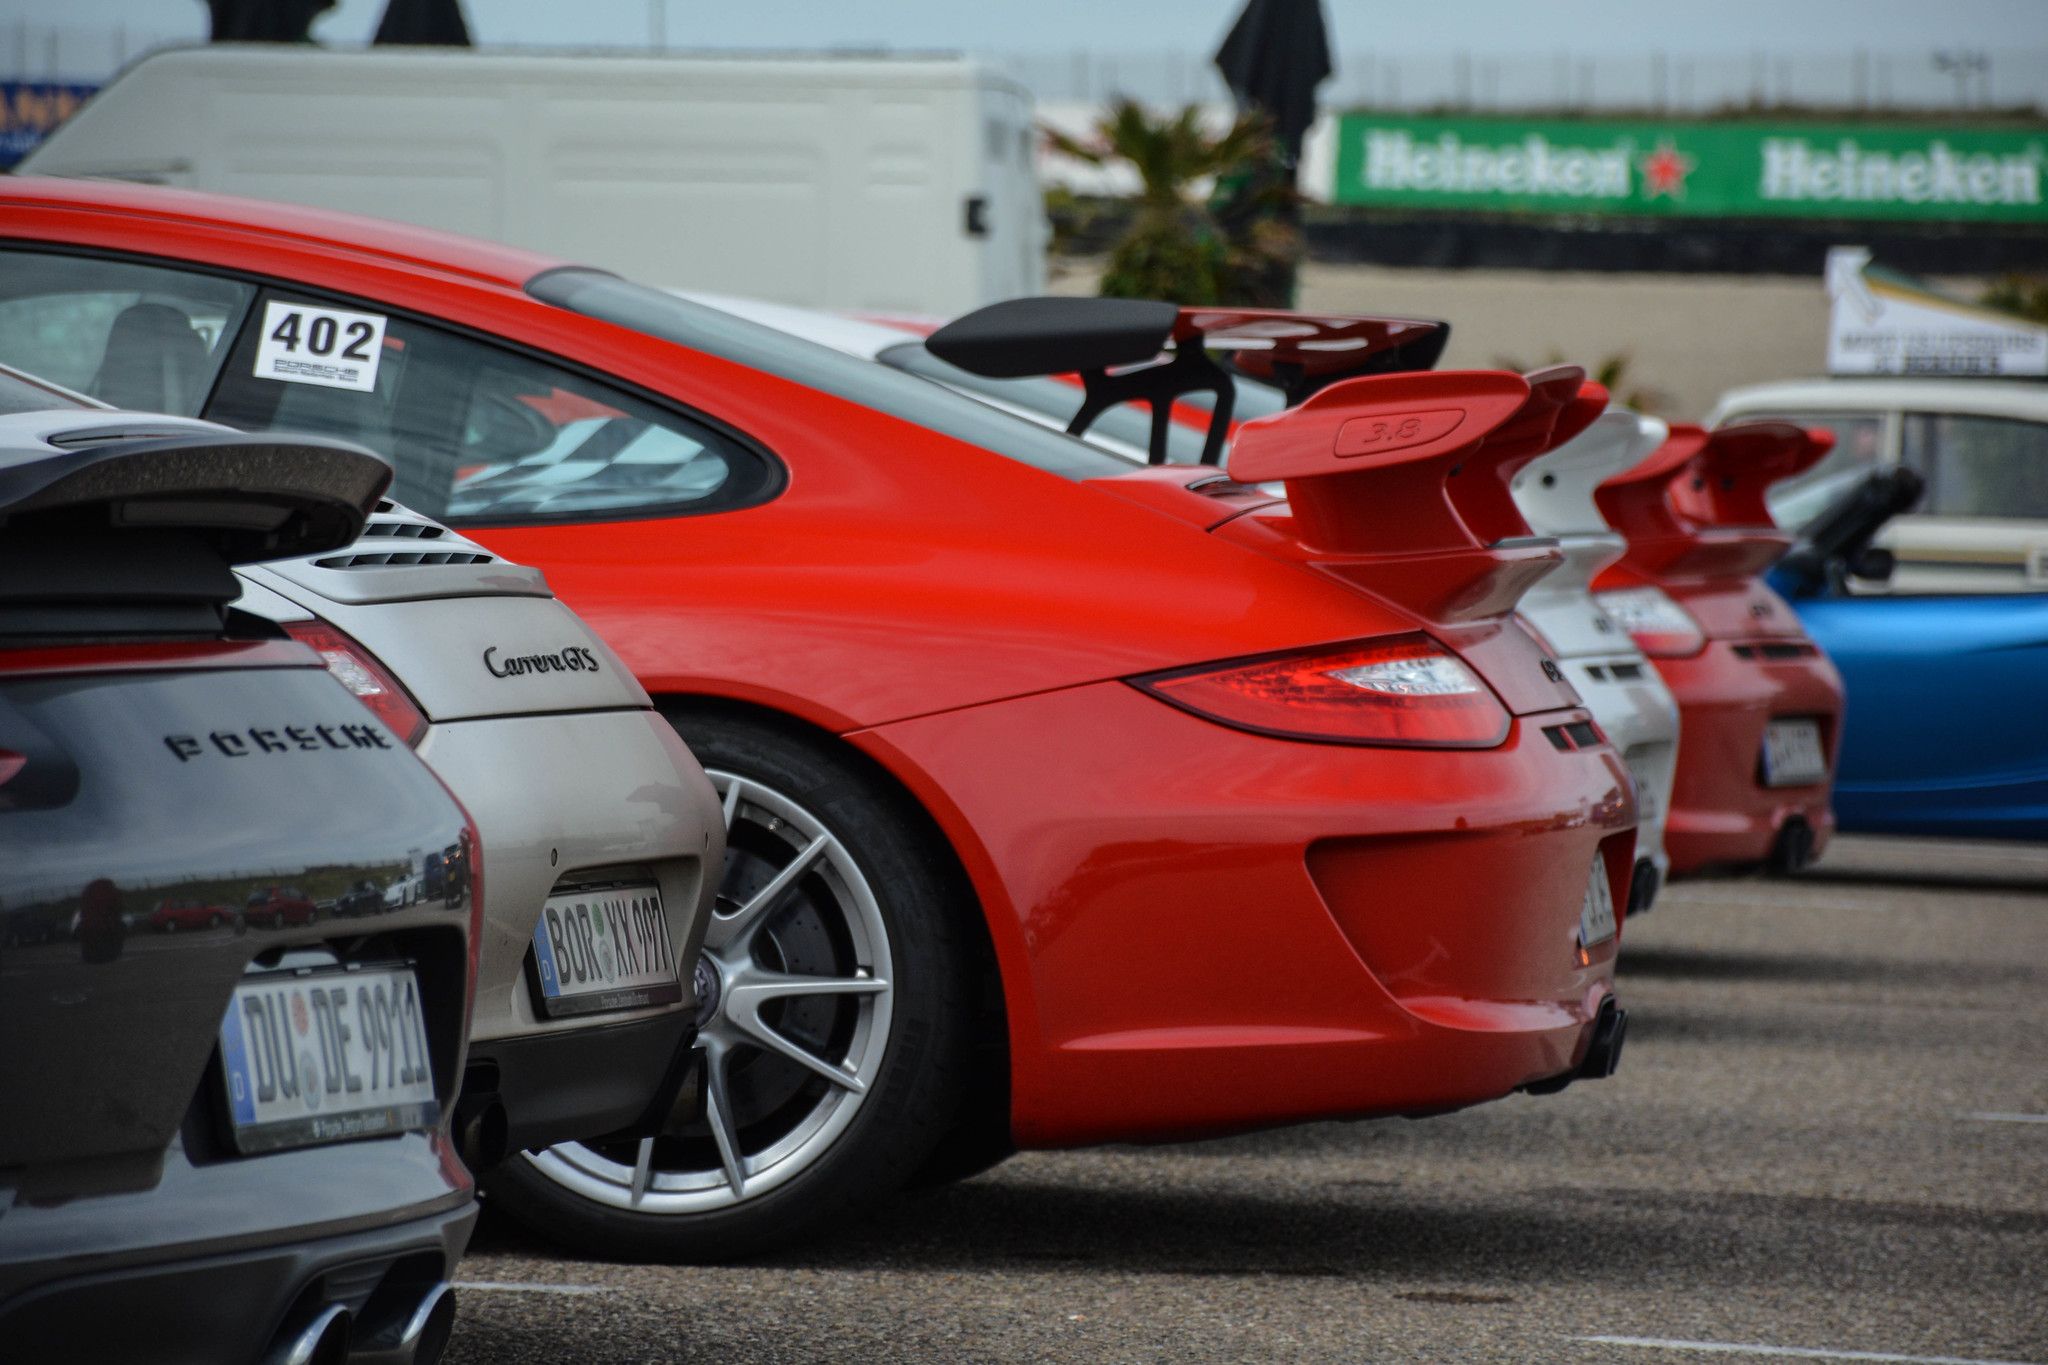 Cool Porsche sports cars in a parking lot